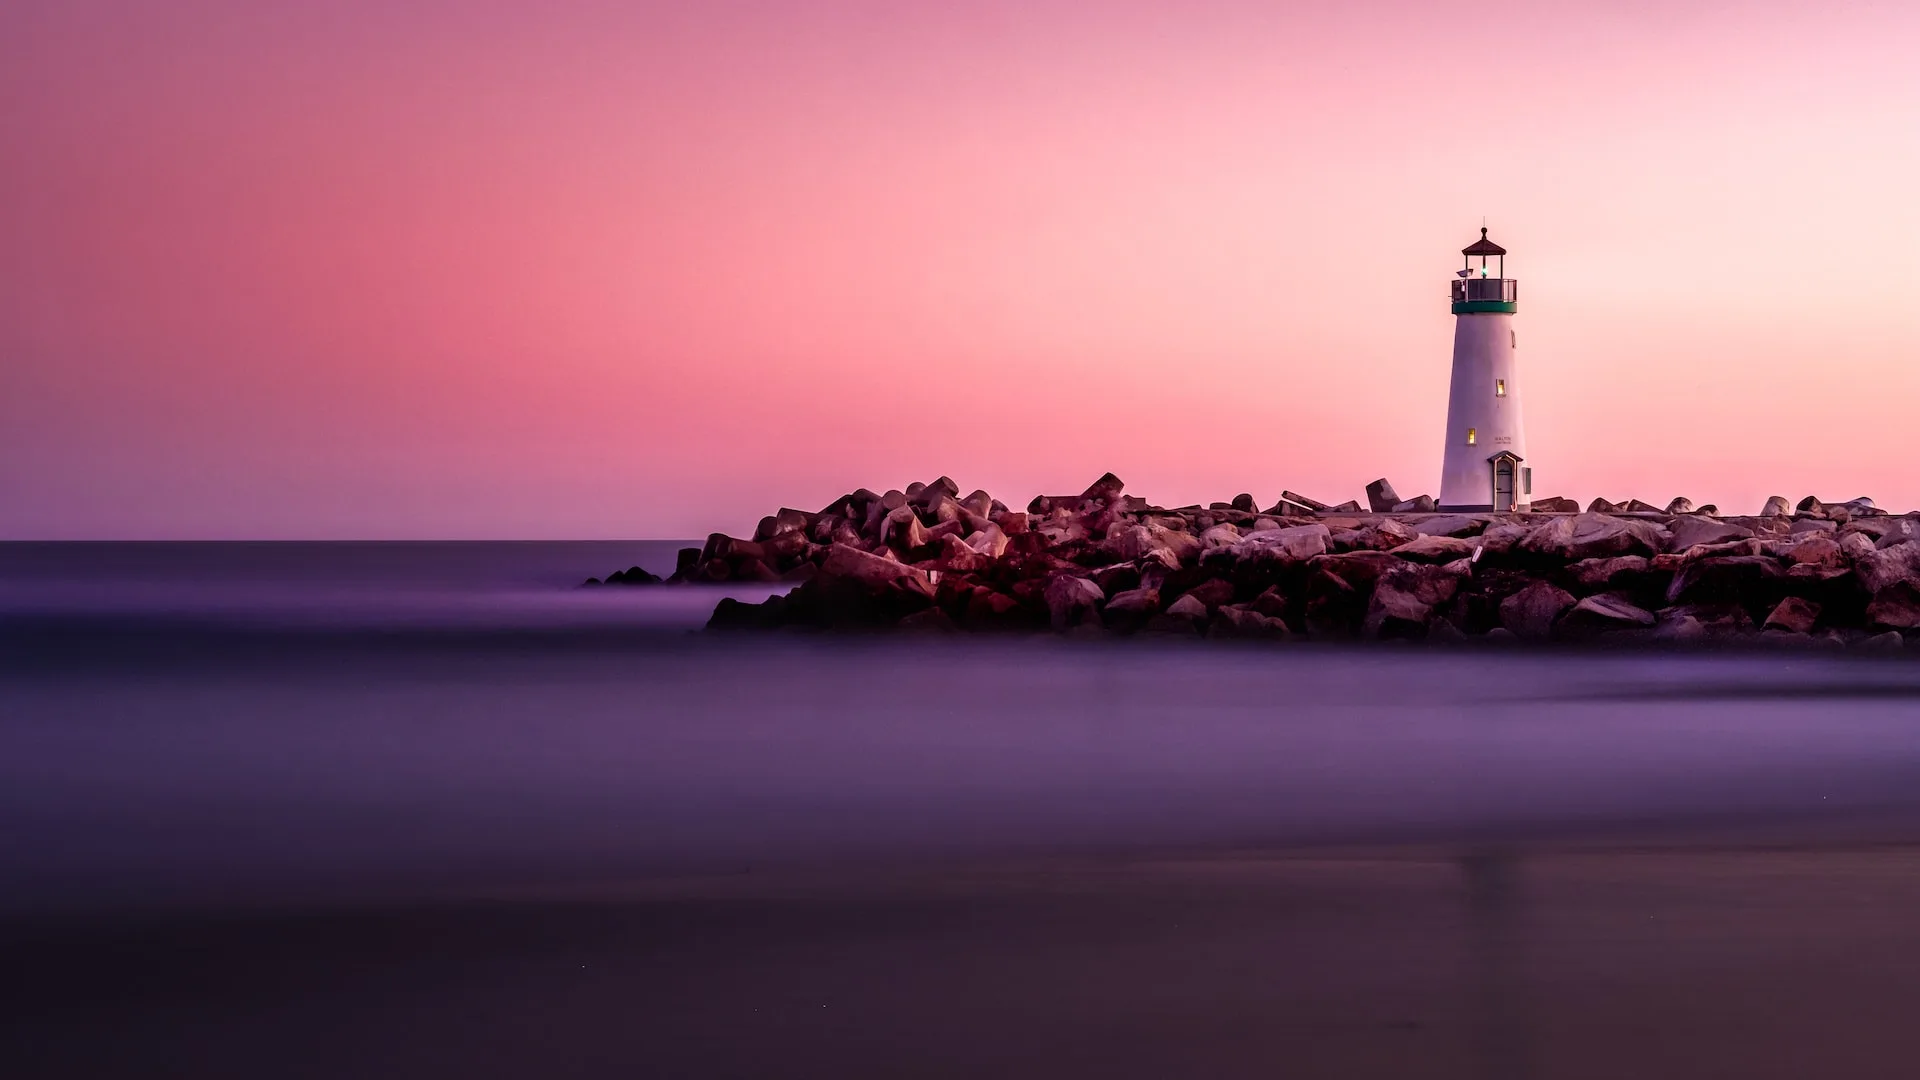 white lighthouse on rocky seashore